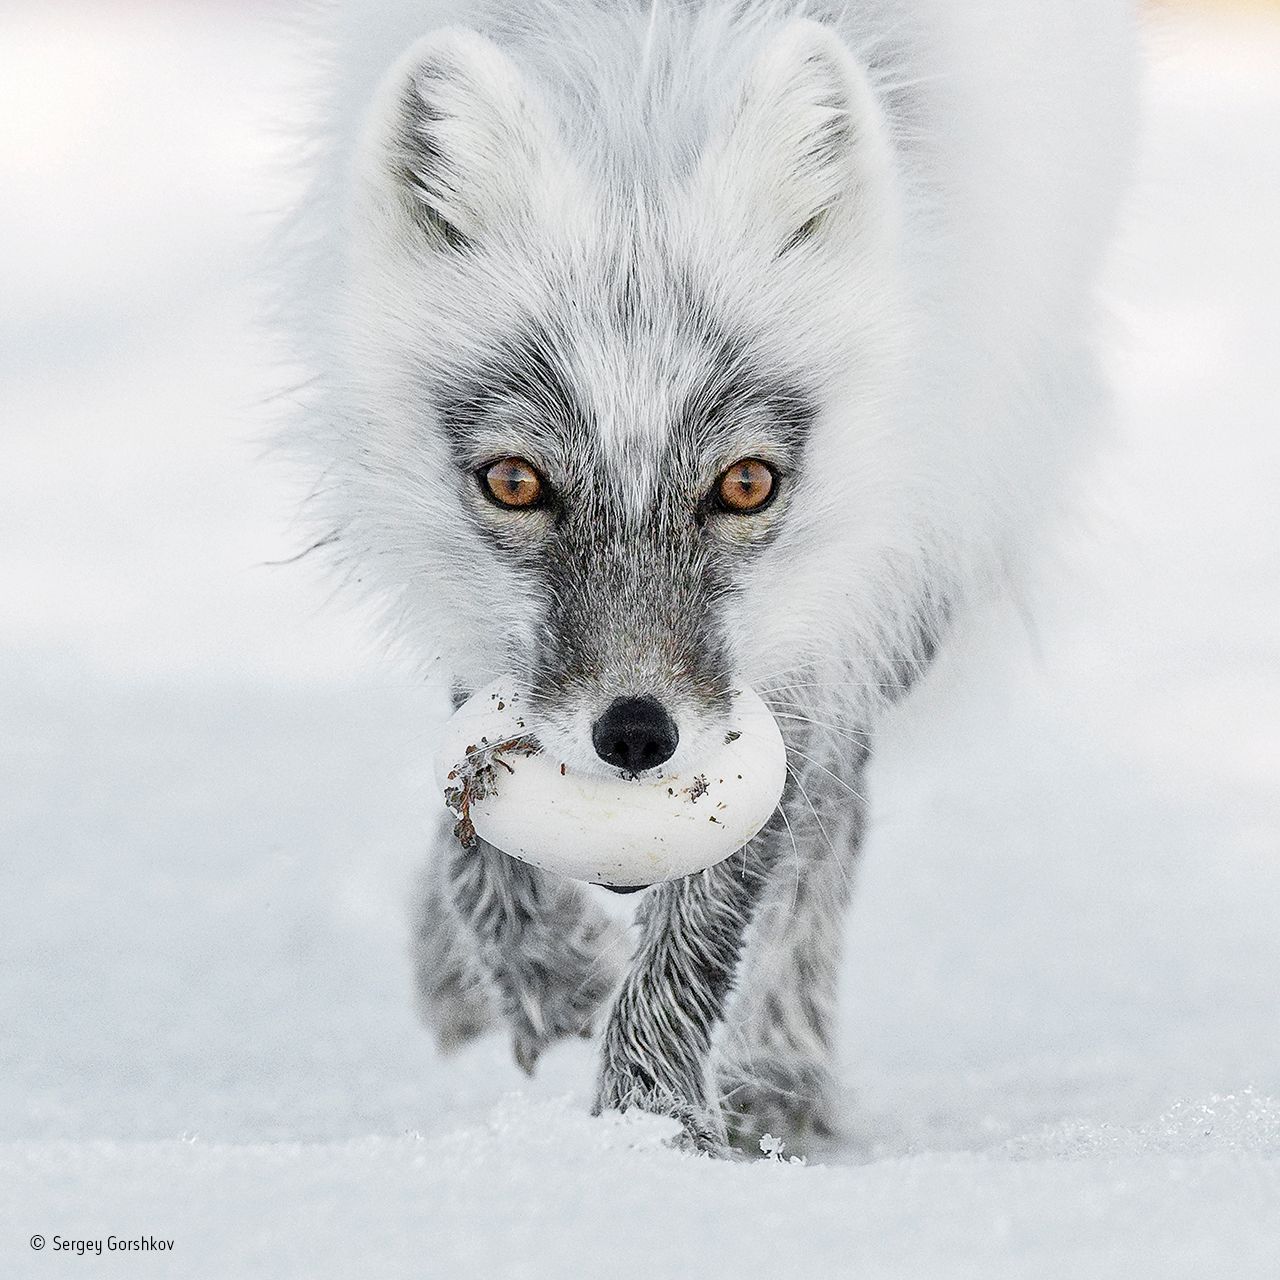 Arctic-treasure-®-Sergey-Gorshkov-Wildlife-Photographer-of-the-Year.jpg